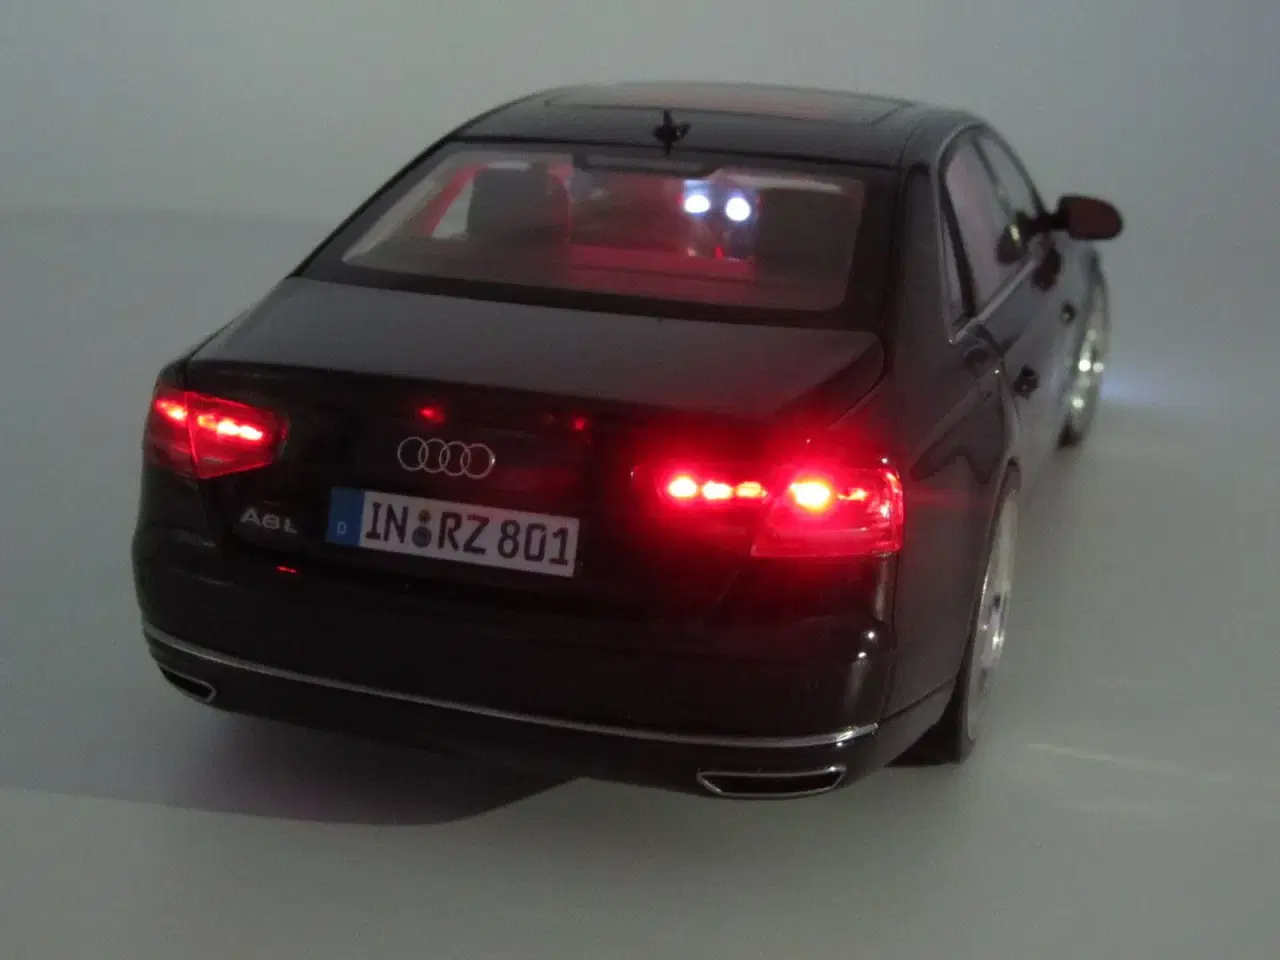 Billede 3 - 2010 Audi A8L W12 LED lys og Panoramatag 1:18  